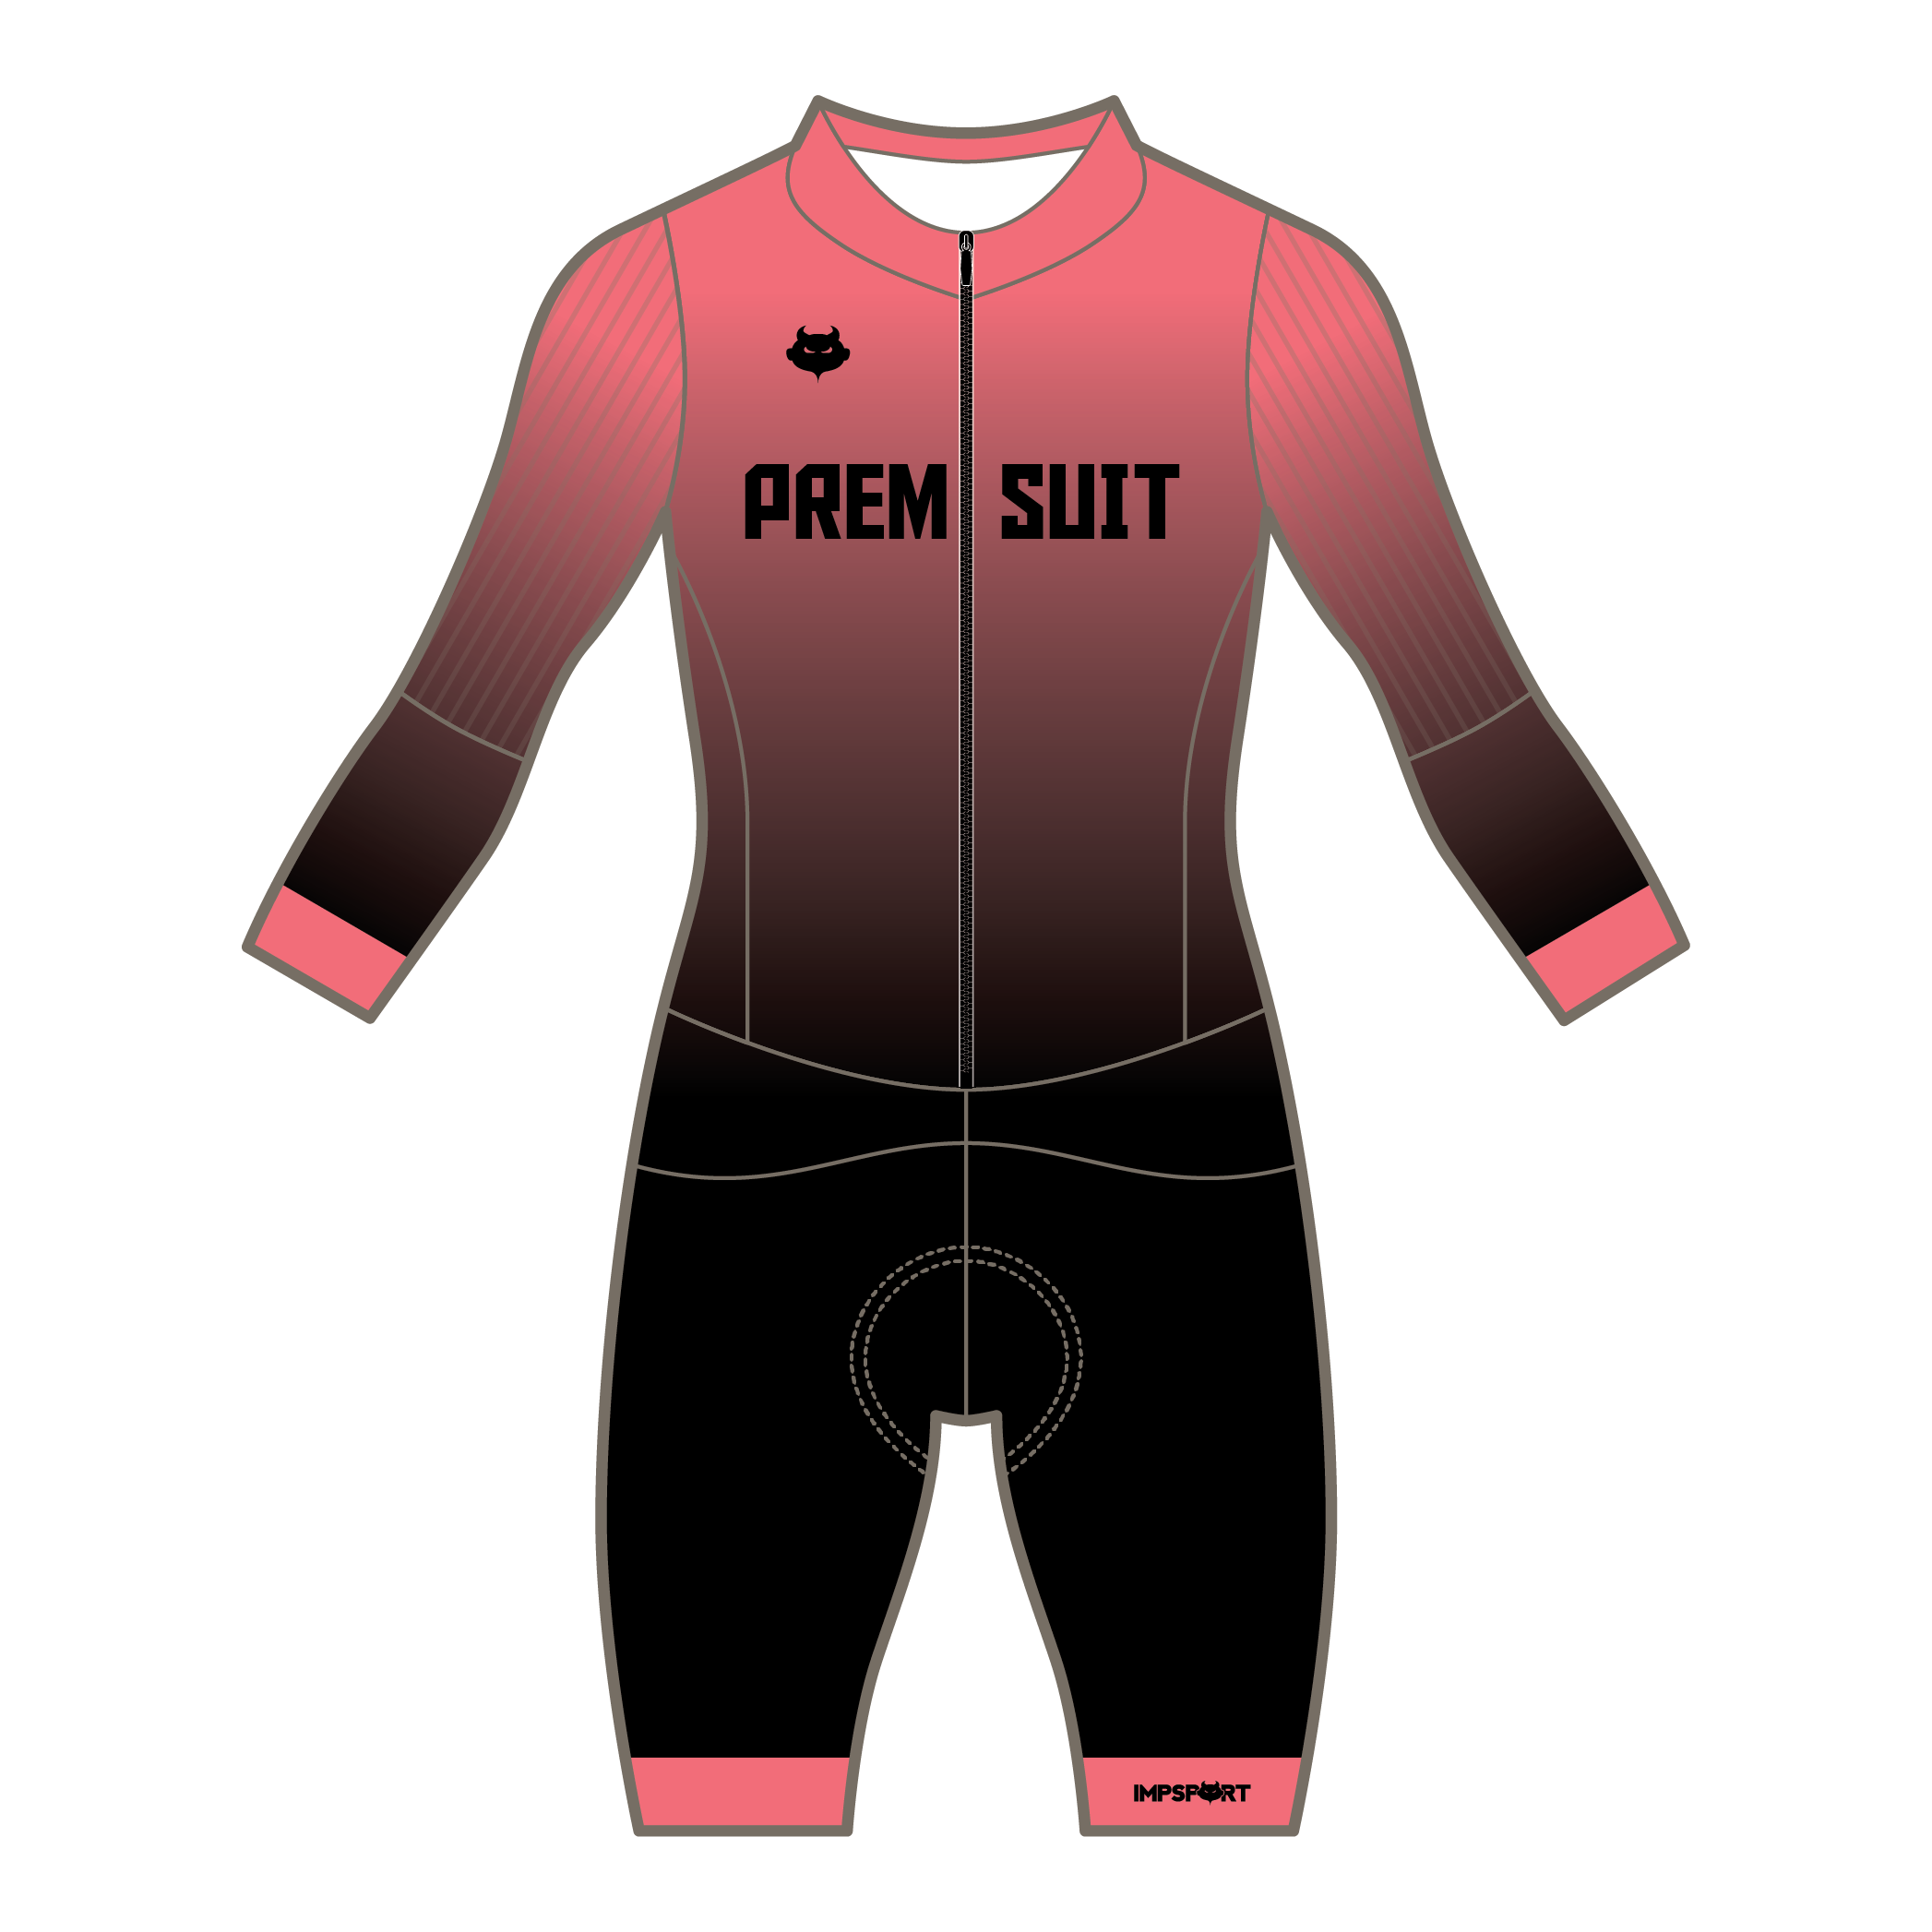 Impsport Prem Suit